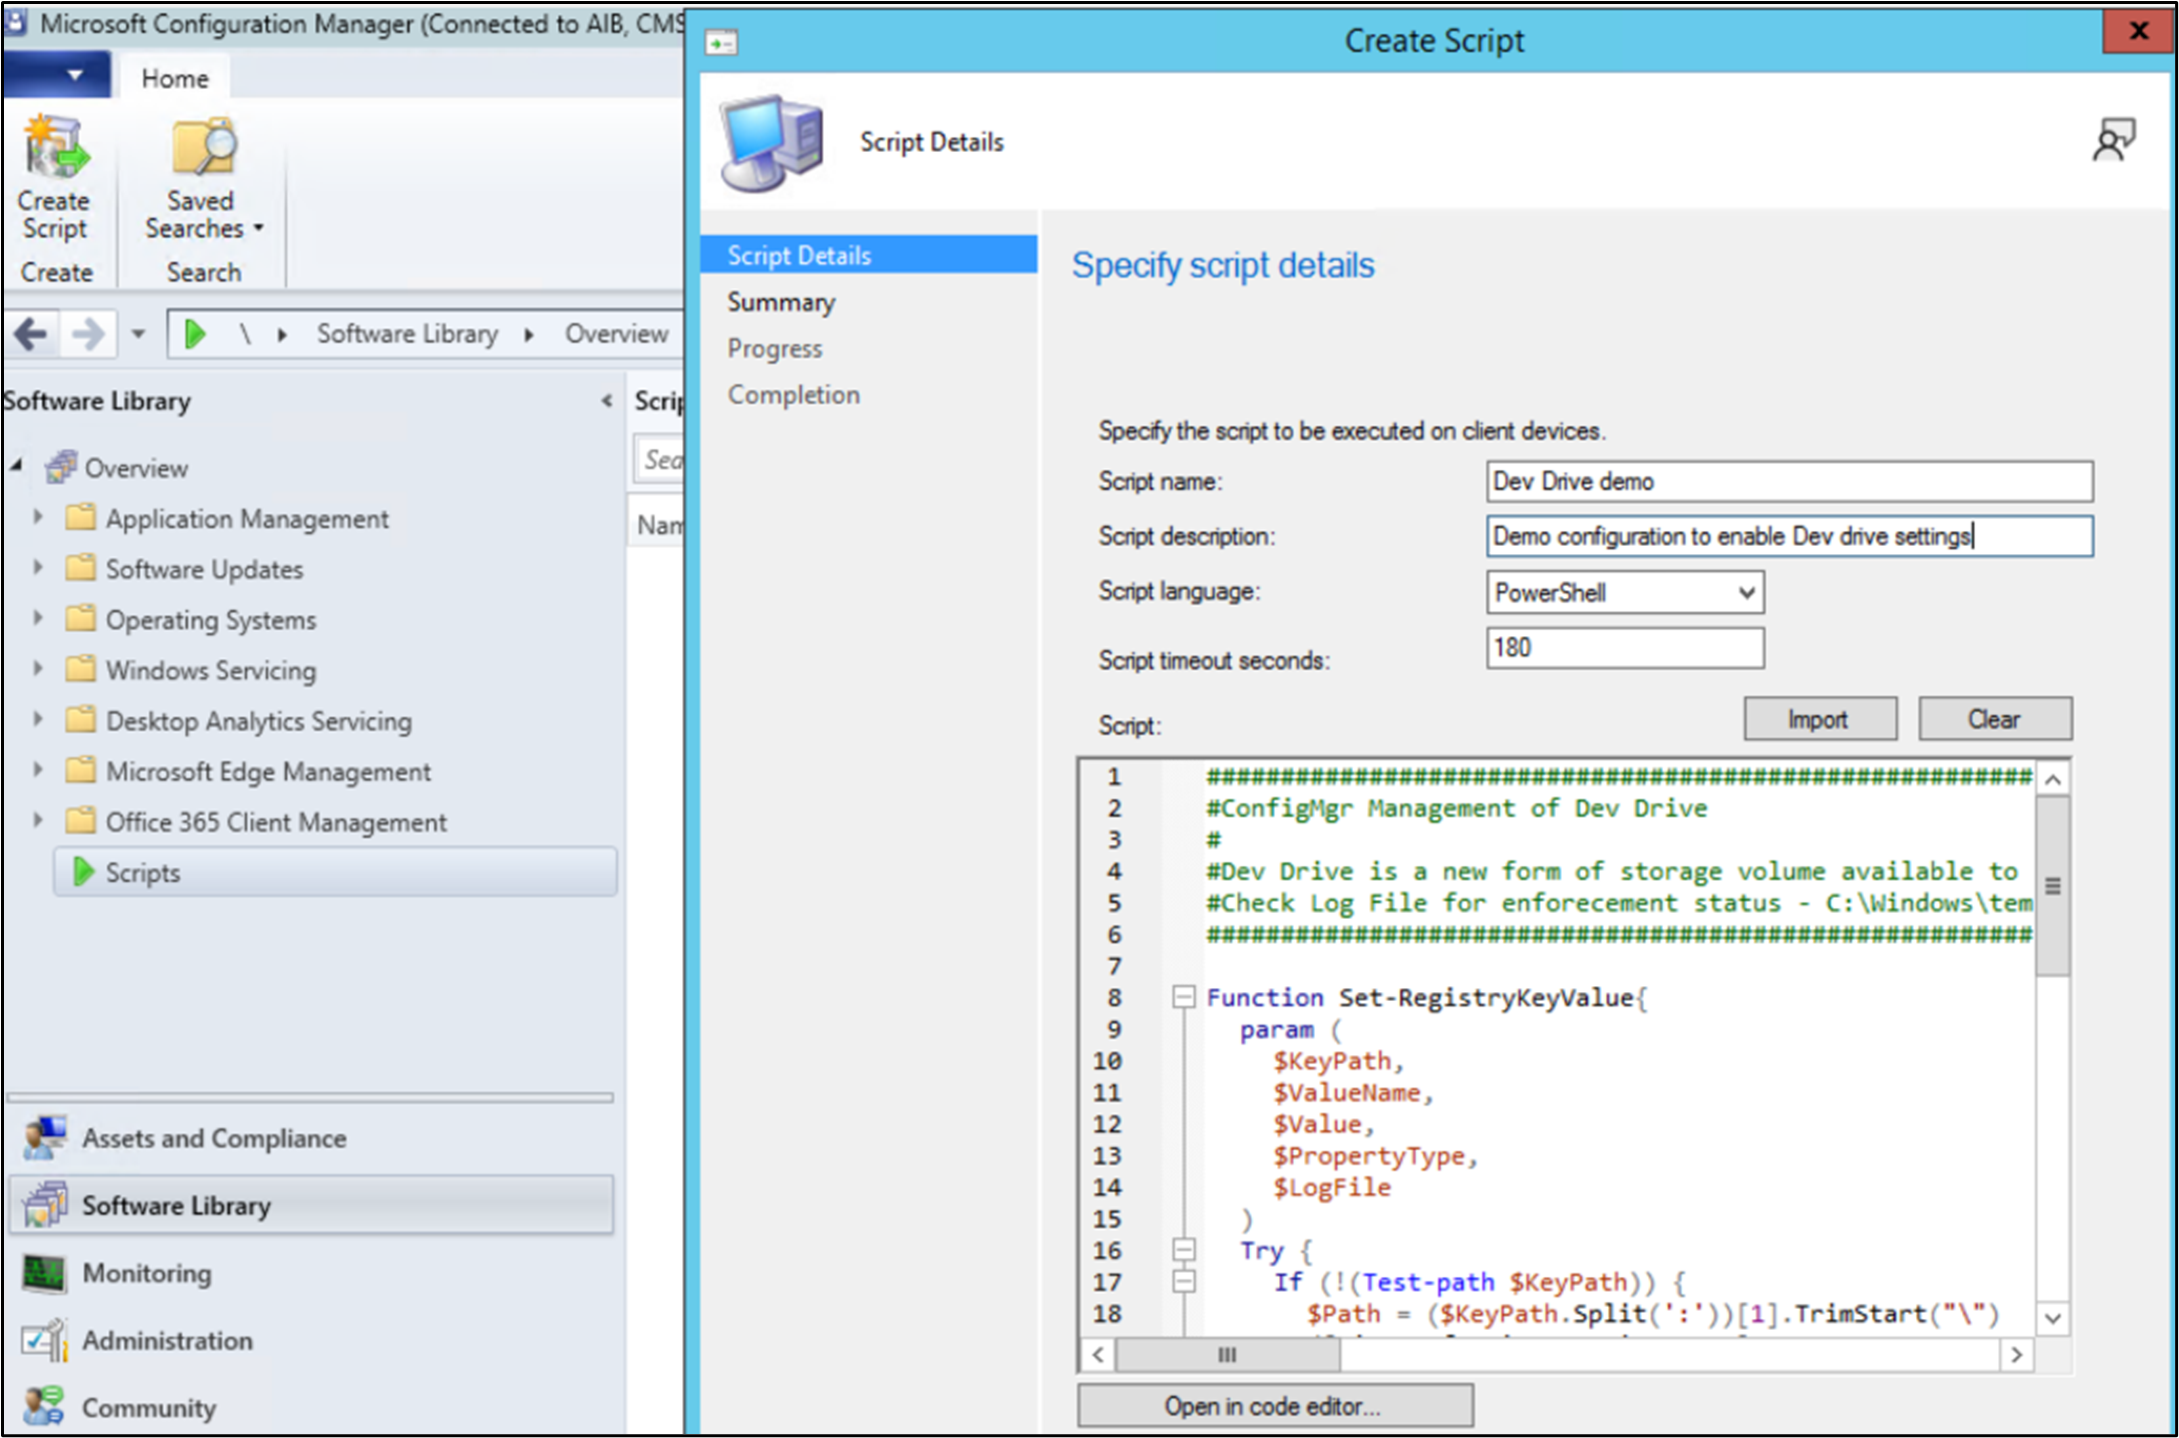 Microsoft Configuration Manager Create Script 視窗的螢幕截圖，顯示詳細資訊，包括草稿名稱、描述、語言、超時秒數和實際草稿